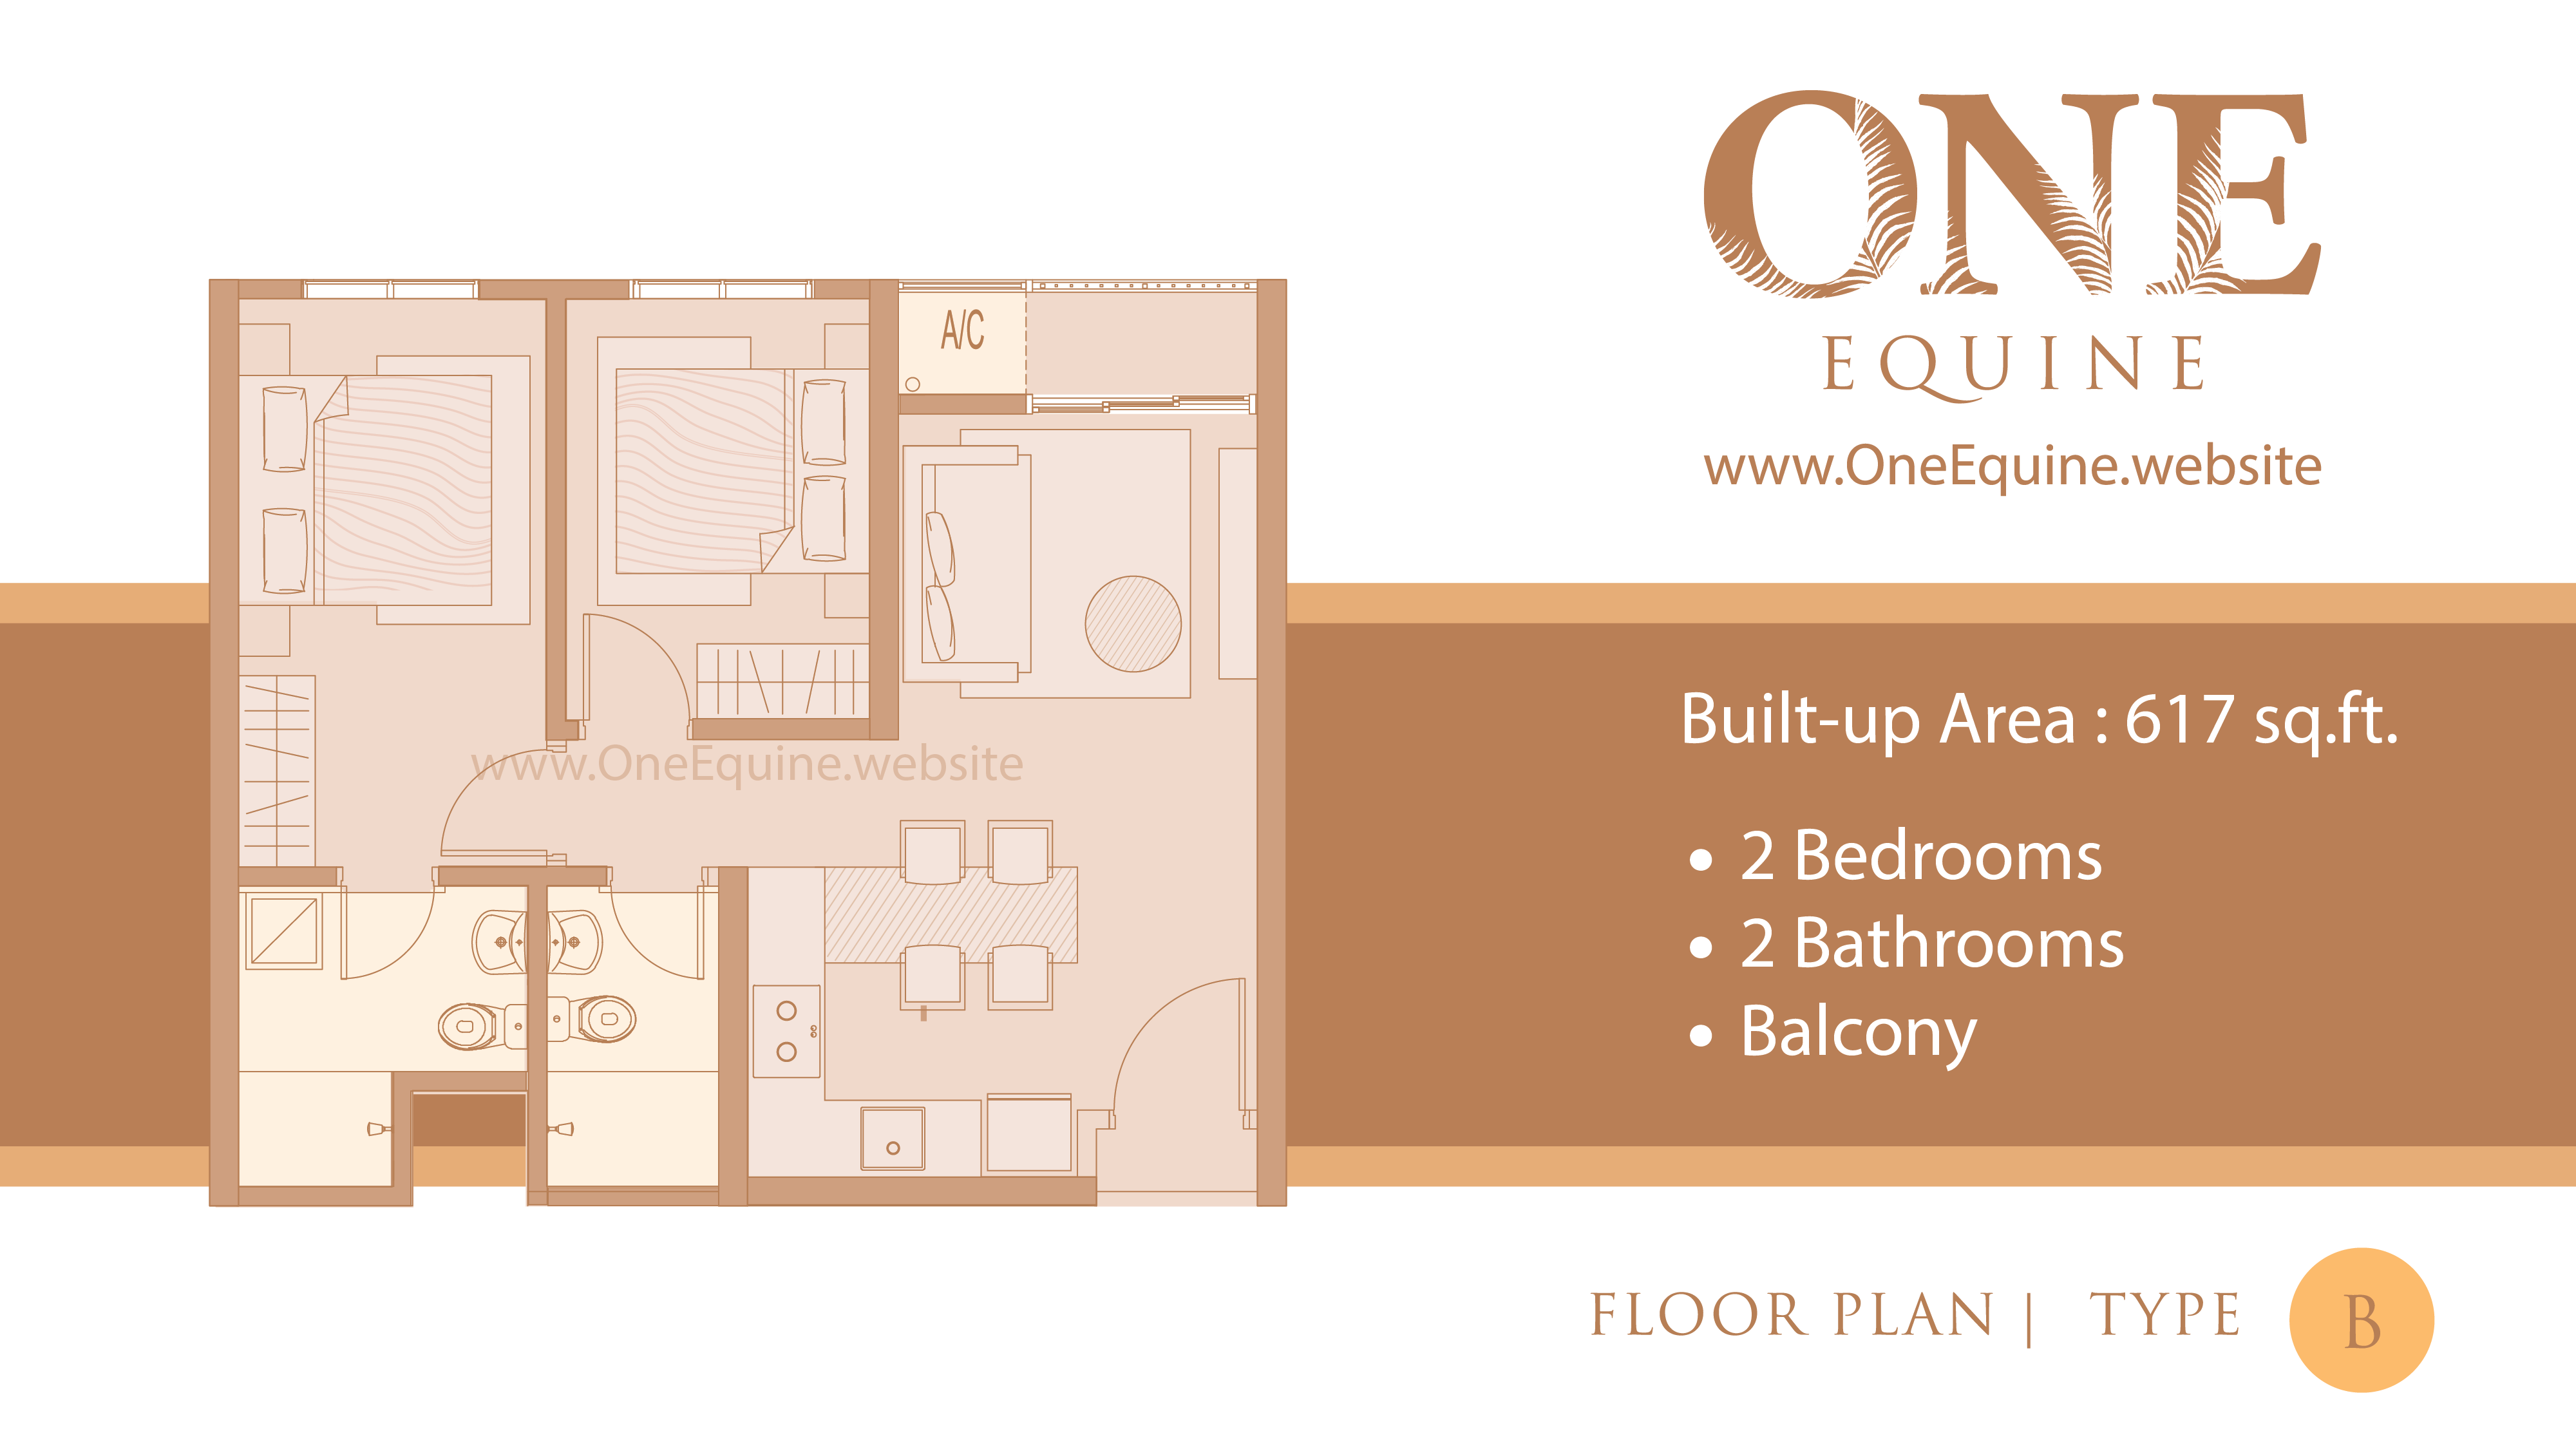 One Equine Park Seri Kembangan - Serviced Apartment 2 Bedrooms 2 Bathrooms Balcony - Floor Plan Type B - 617 sqft